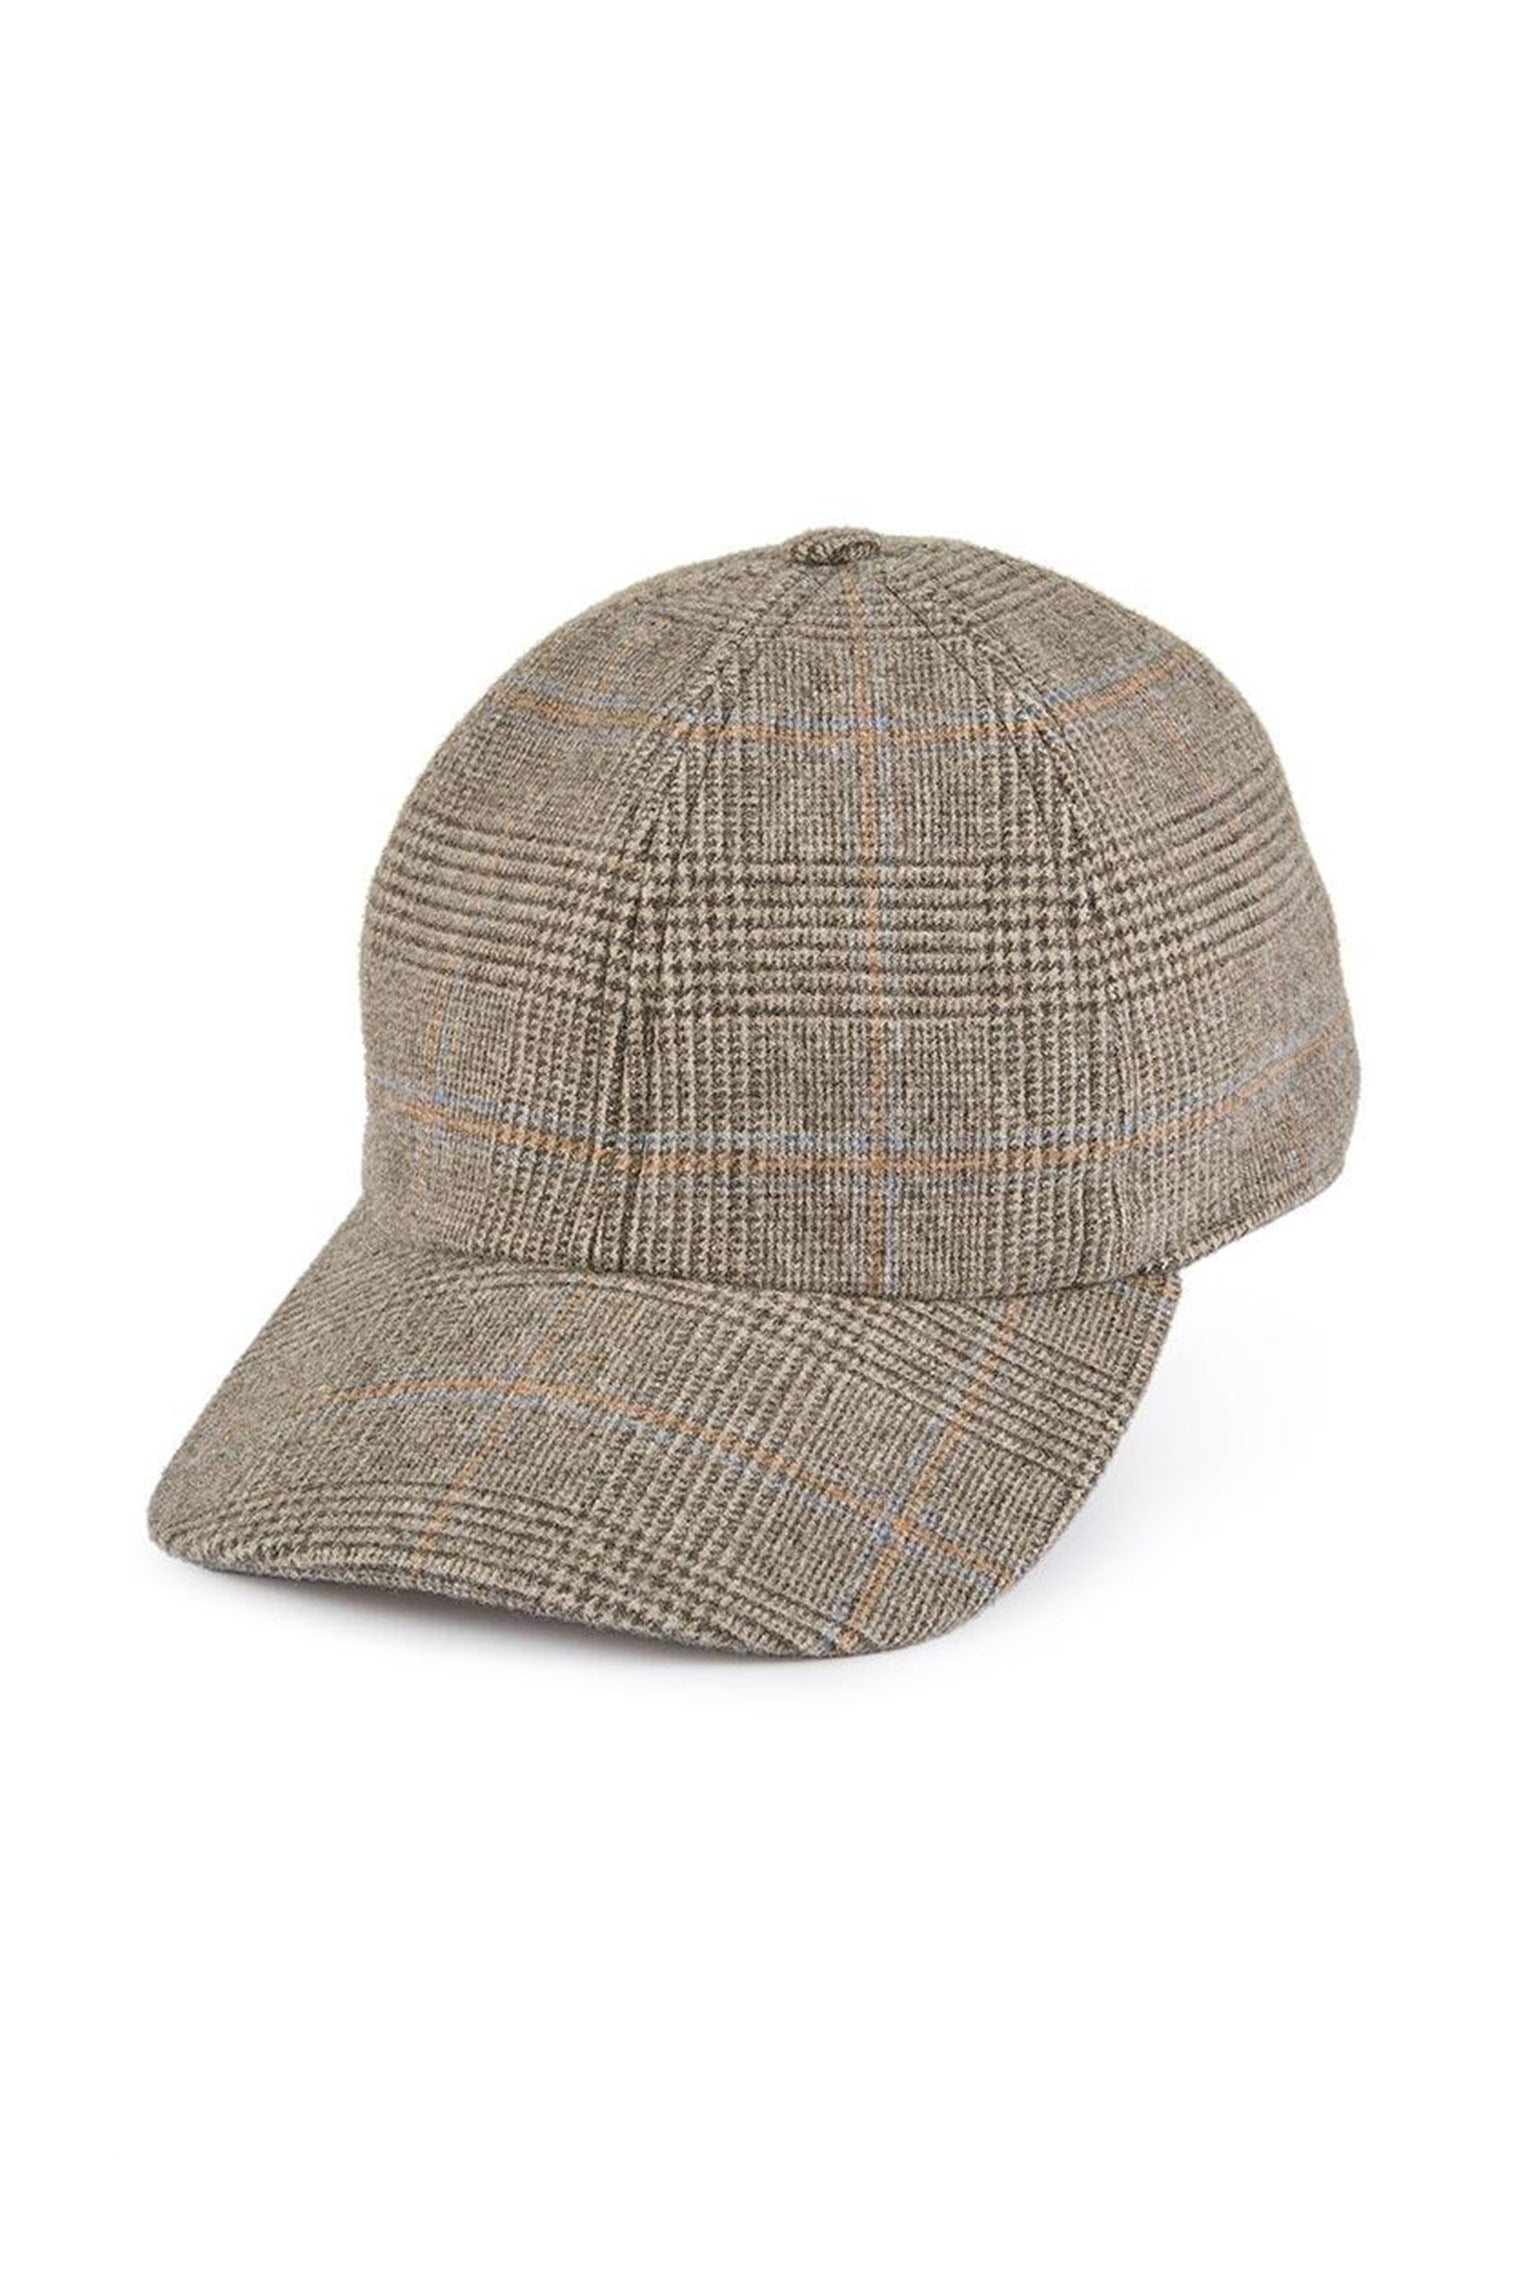 Escorial Wool Baseball Cap - Escorial Wool Hats - Lock & Co. Hatters London UK